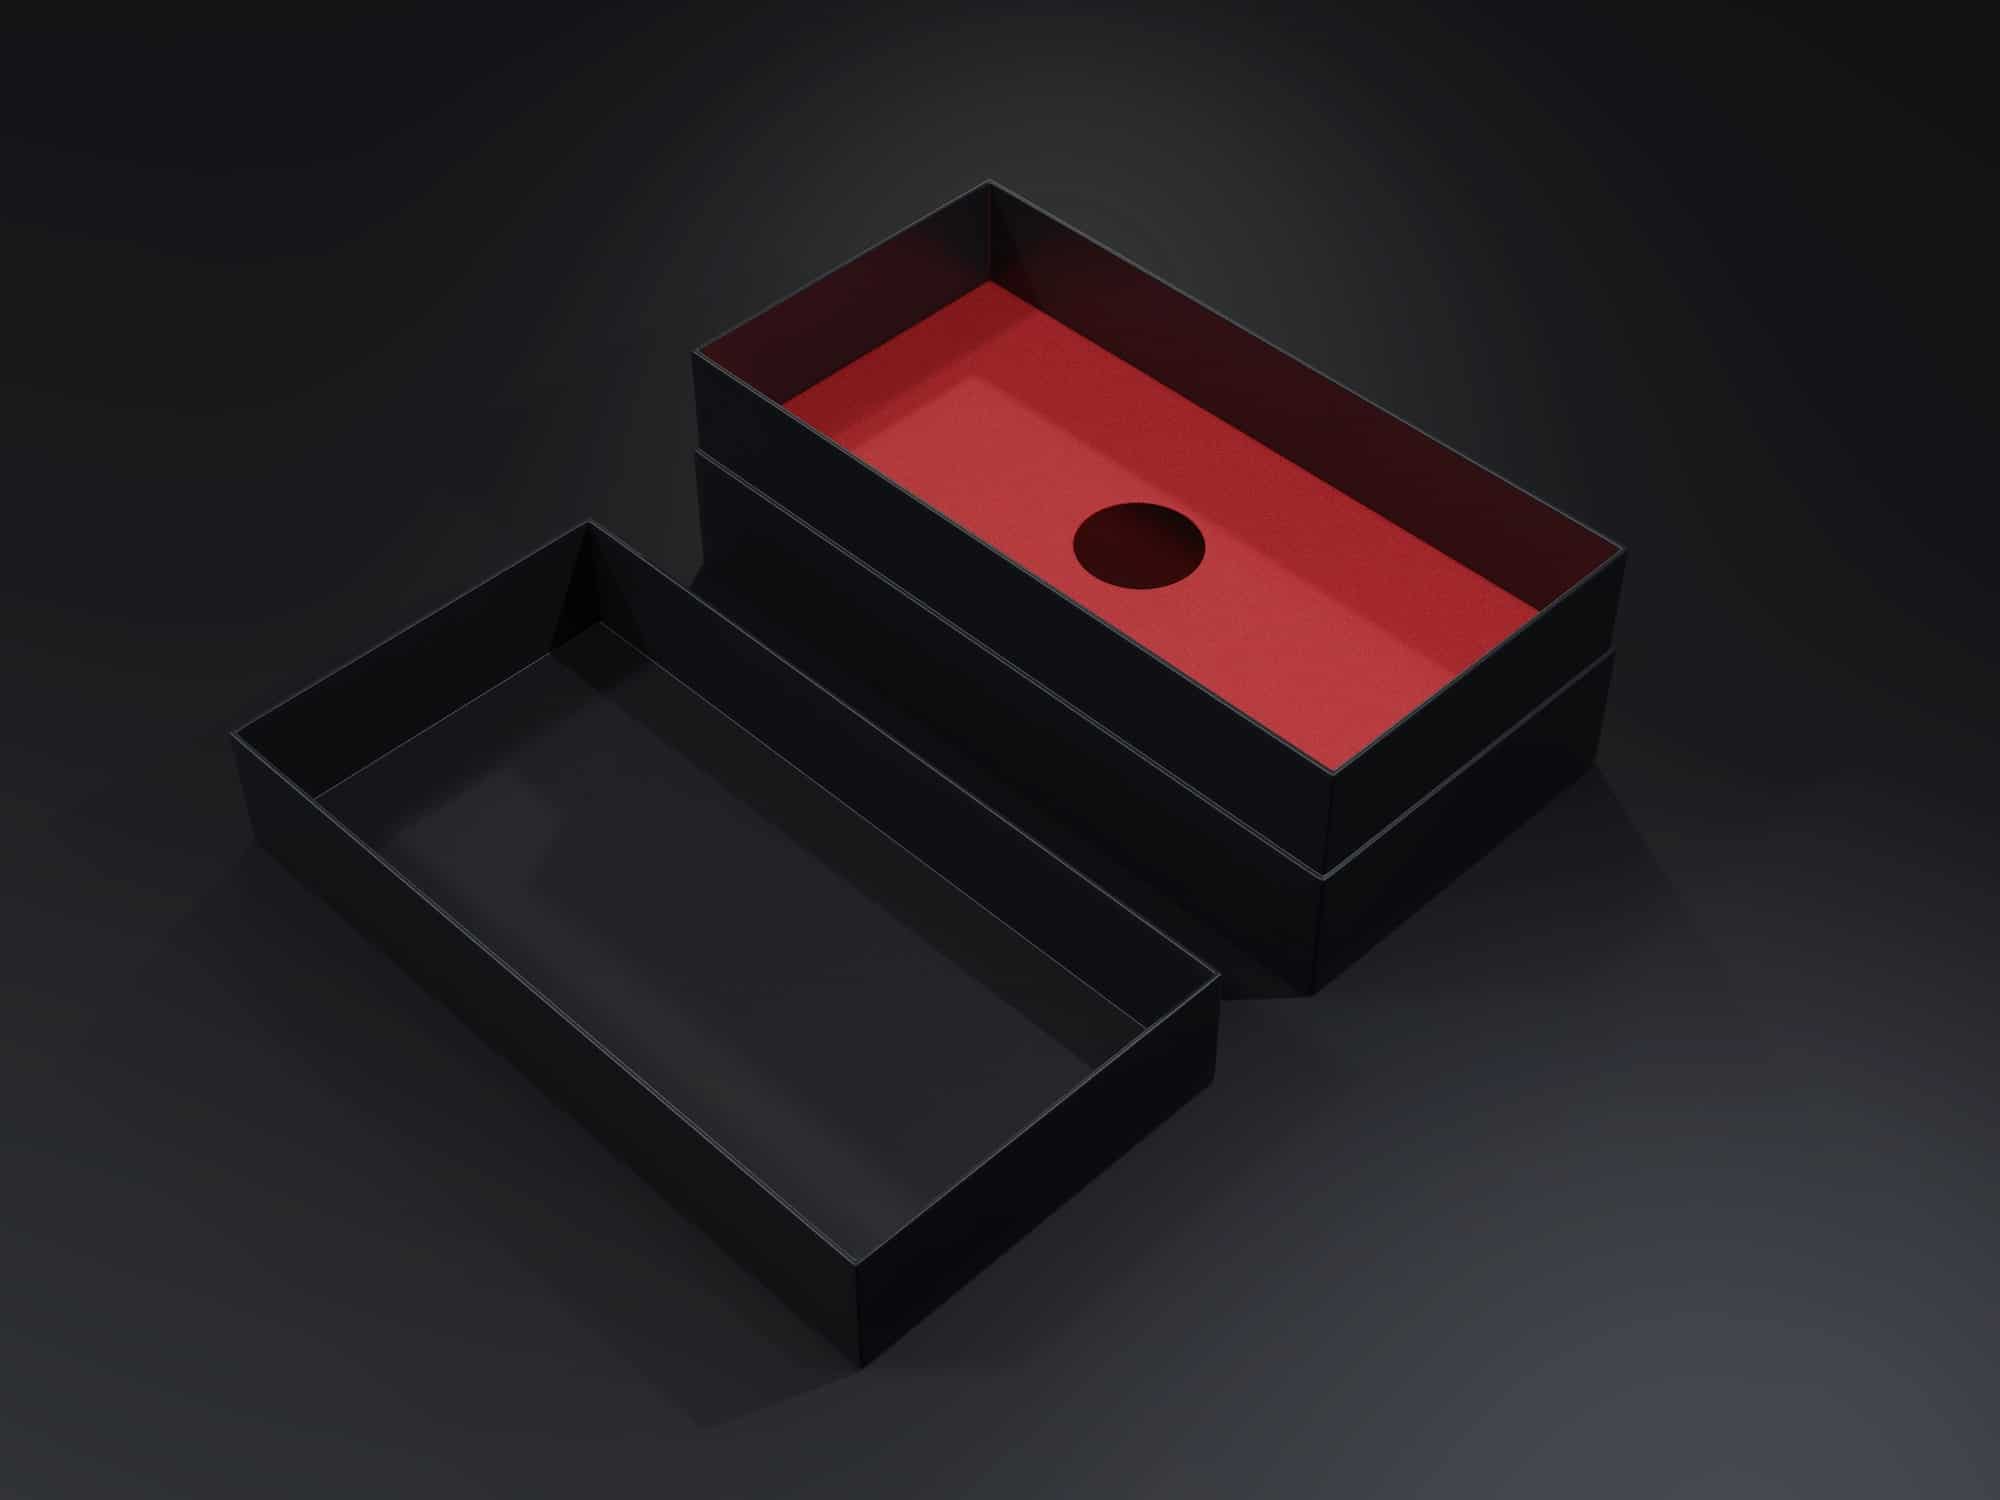 black-blank-cardboard-box-on-a-dark-background-mock-up-template-1-1.jpg